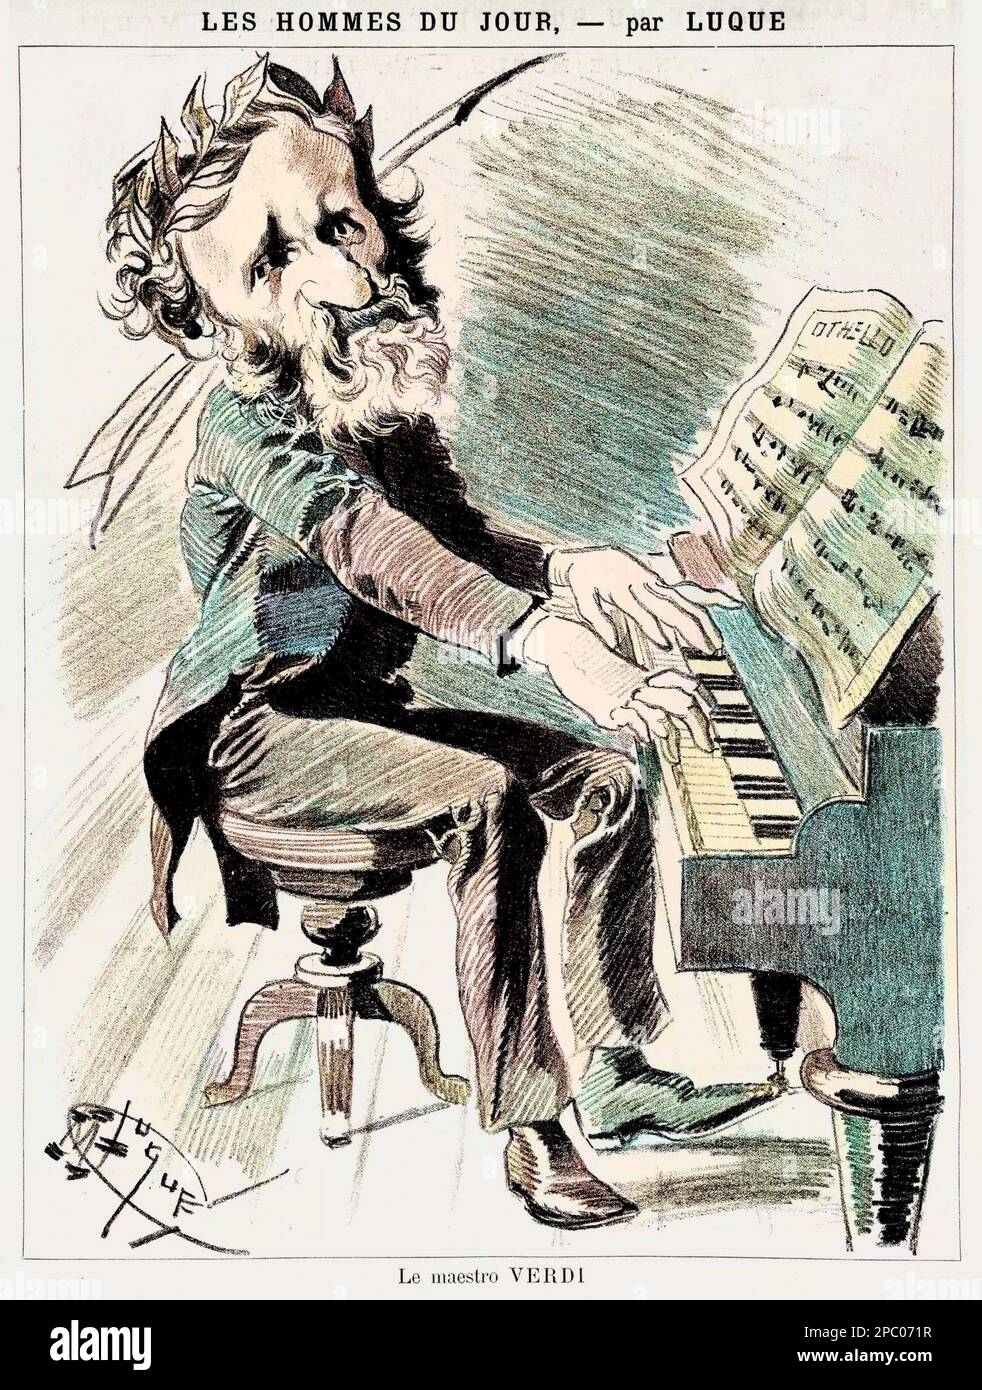 Caricature de Giuseppe Verdi - par Manuel Luque, 1887. Stock Photo